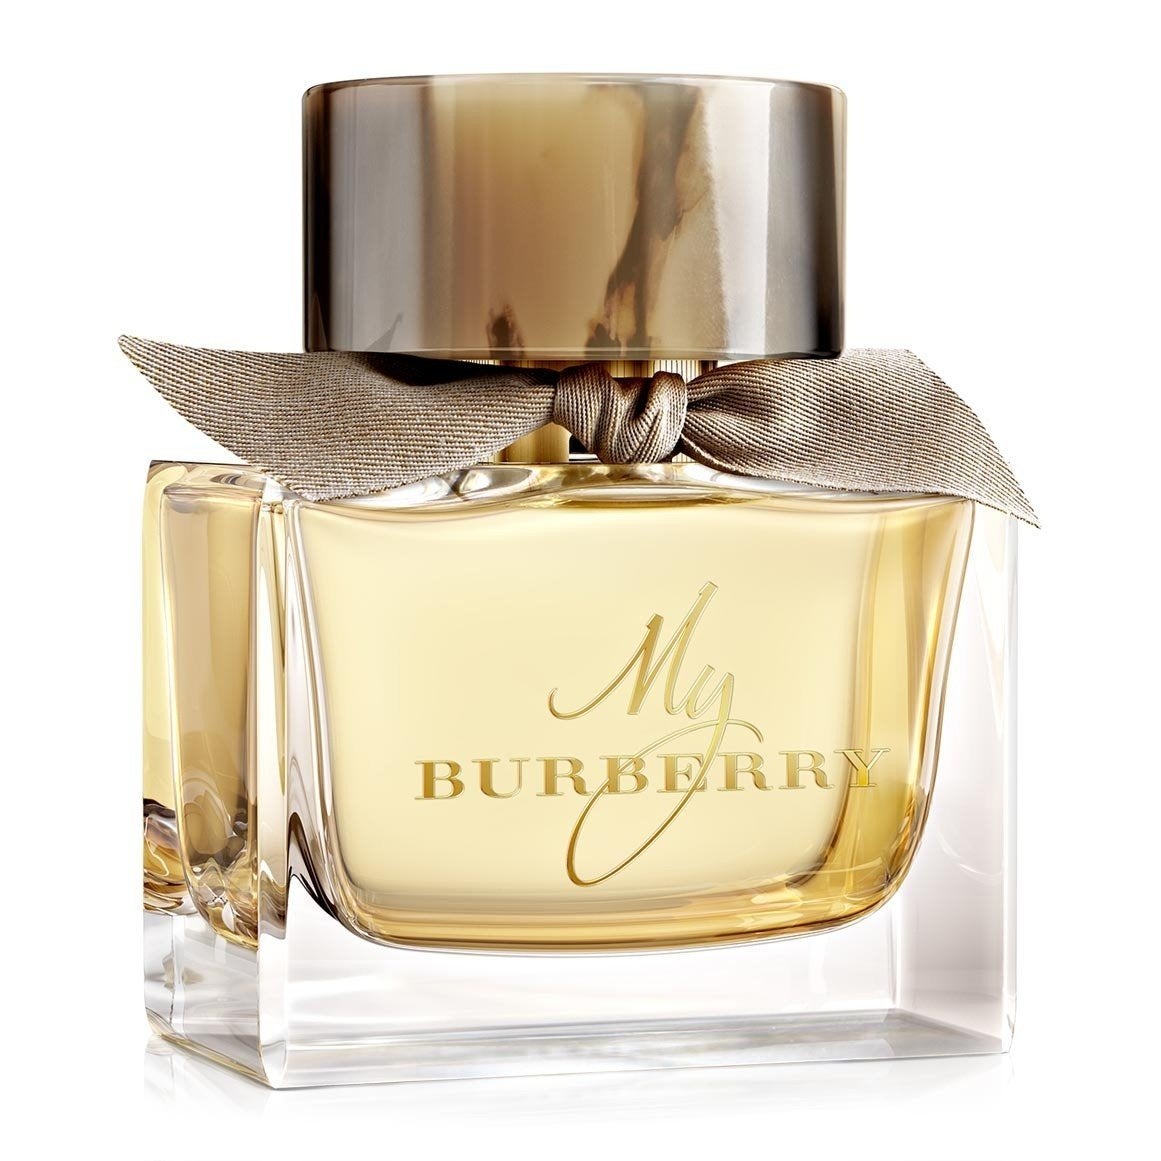 burberry perfume price in usa